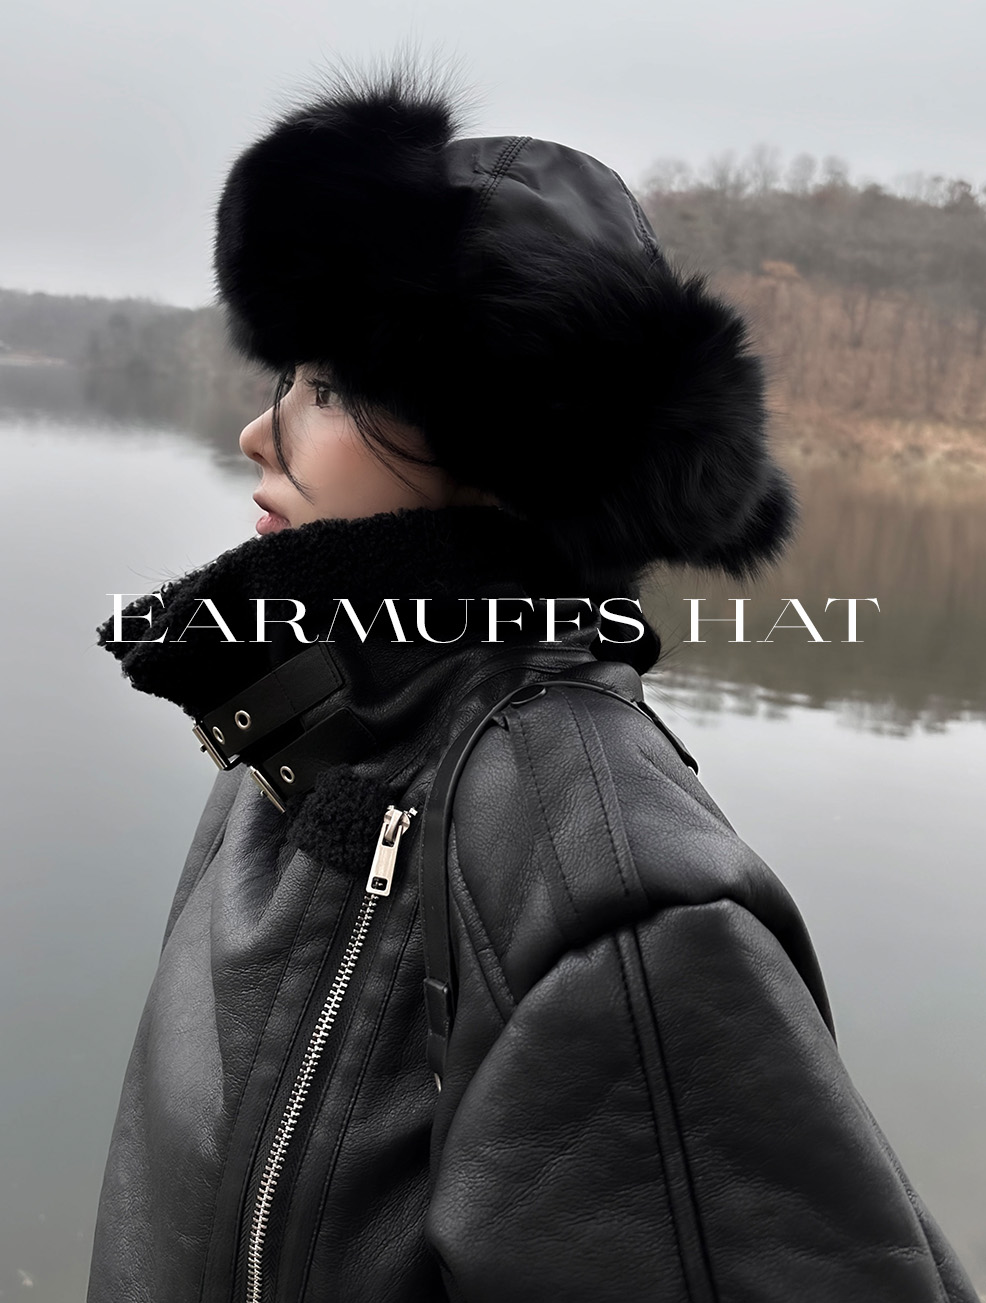 Earmuffs hat